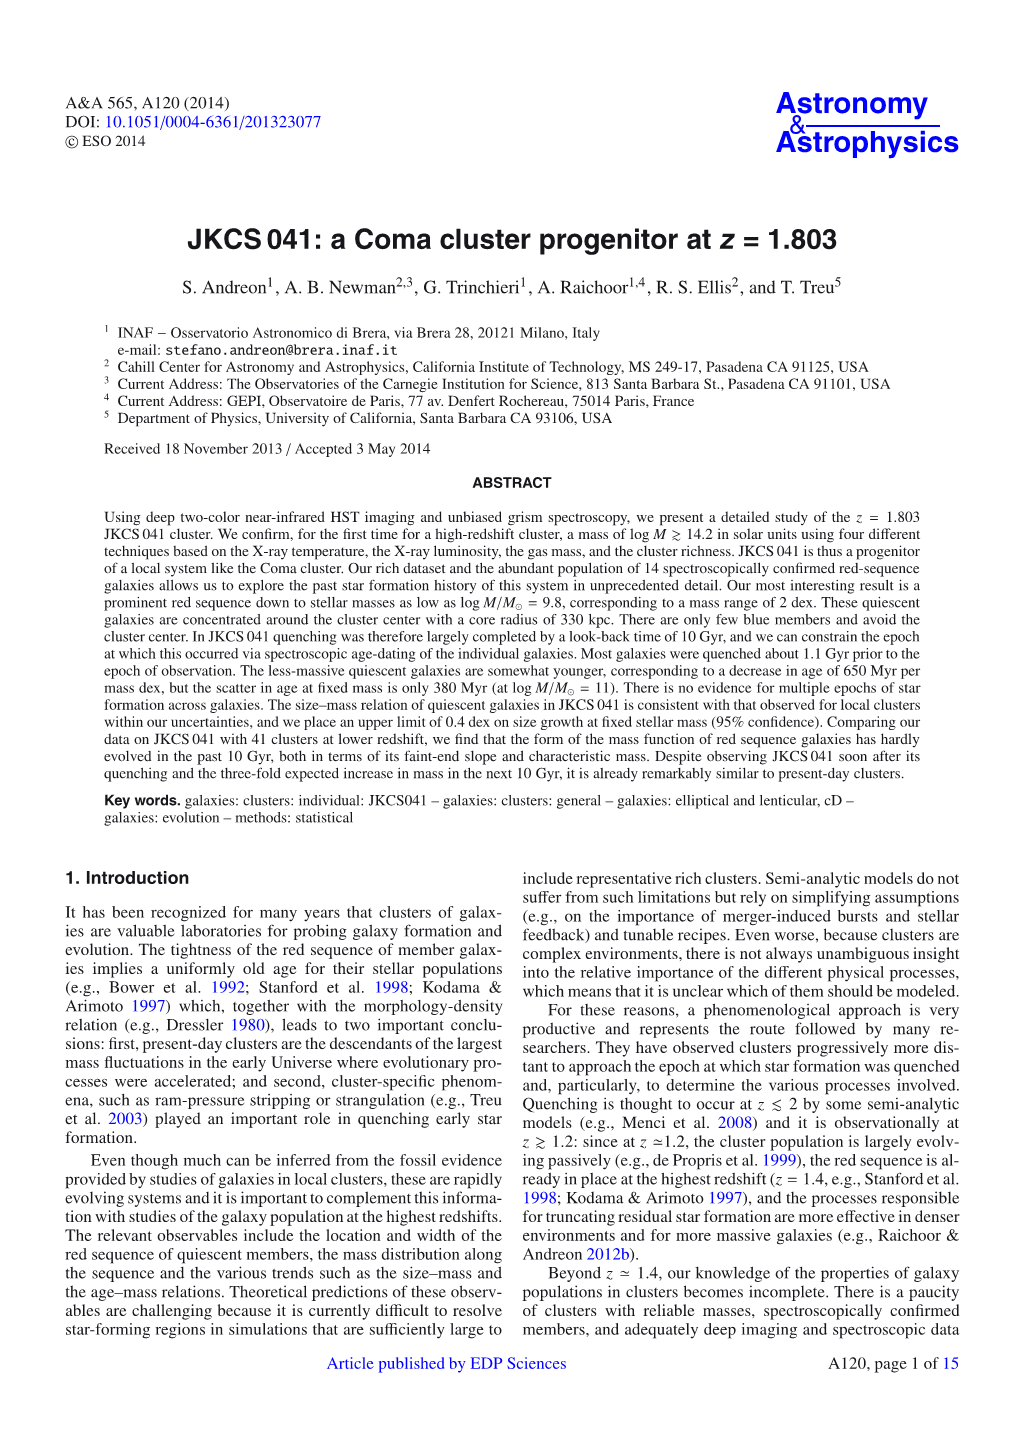 JKCS 041: a Coma Cluster Progenitor at Z = 1.803